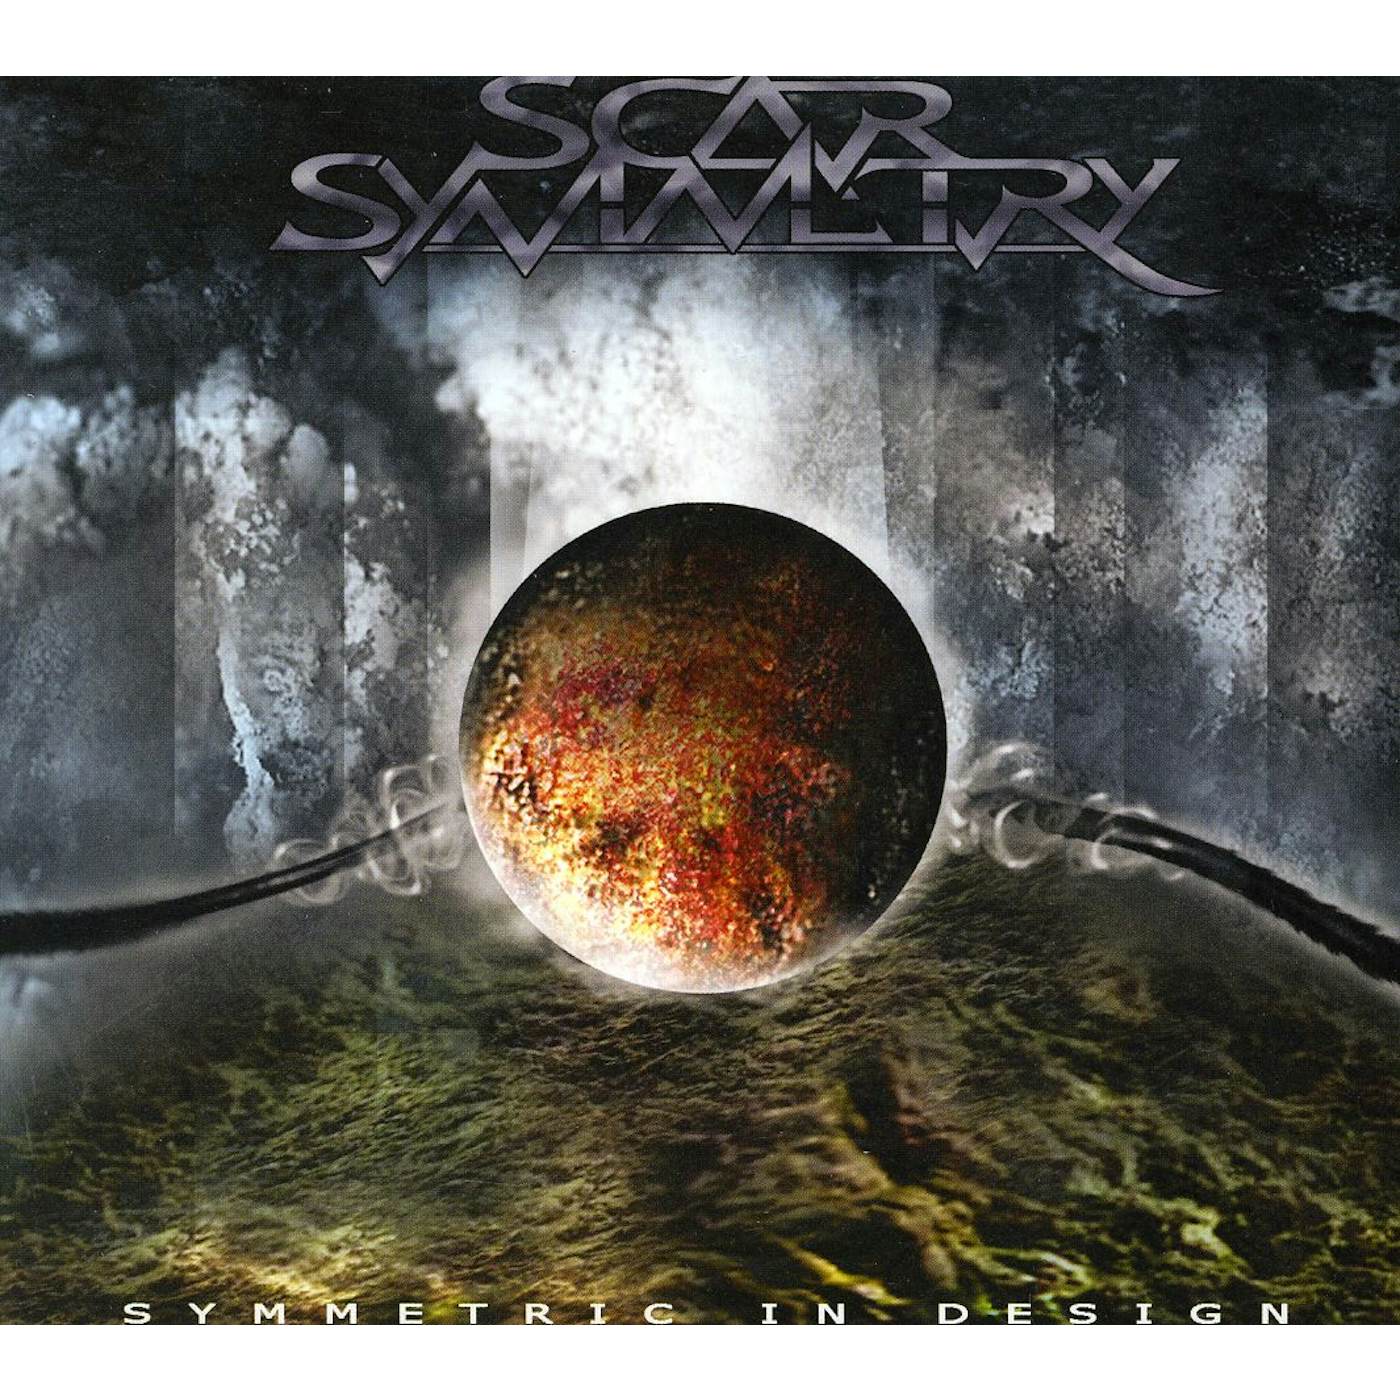 Scar Symmetry SYMMETRIC IN DESIGN CD